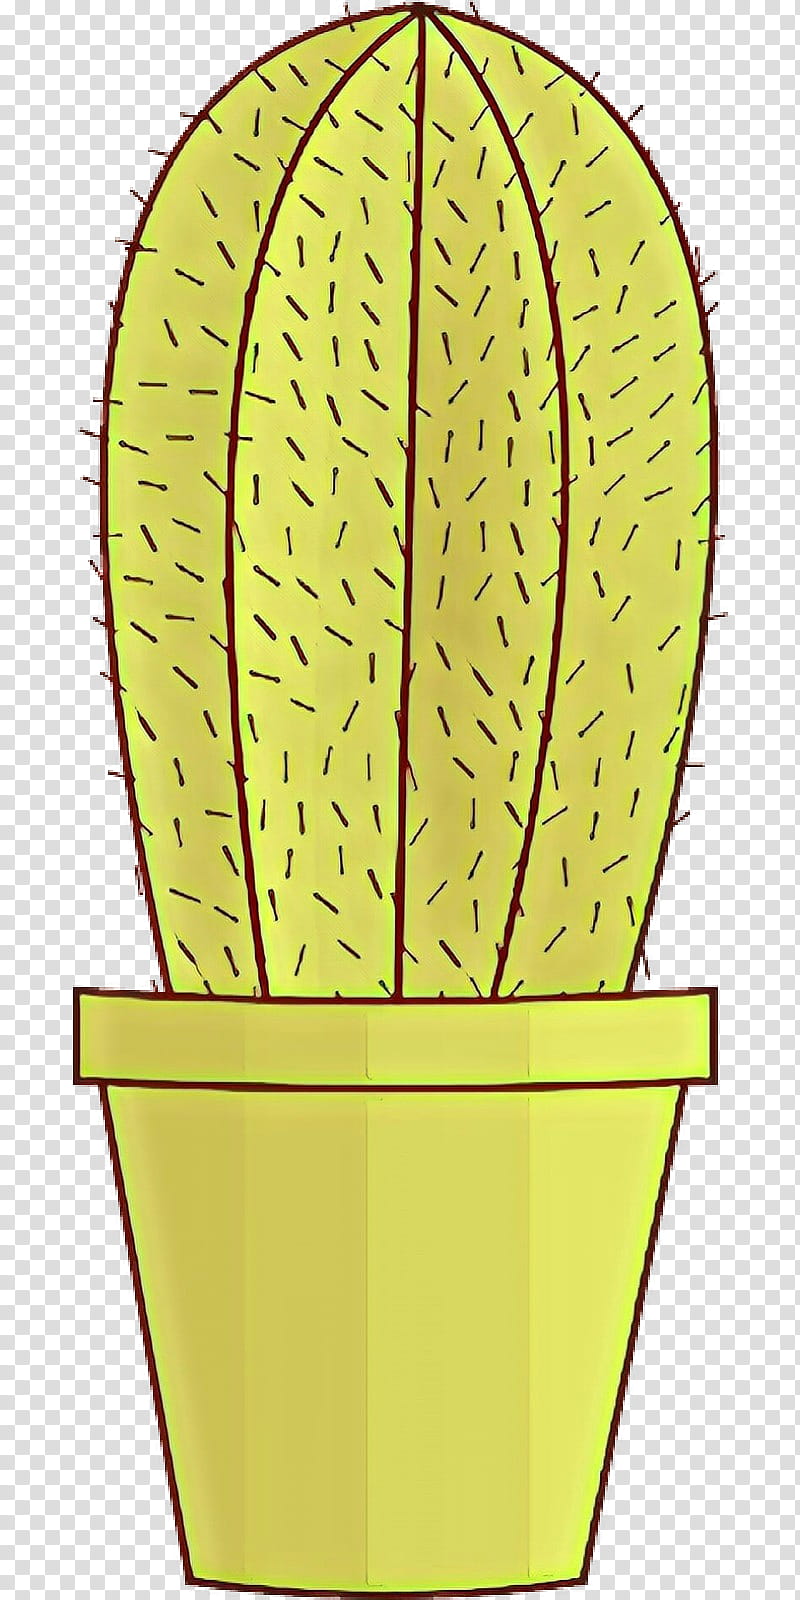 Cactus, Cartoon, Flowerpot, Yellow, Plant, Houseplant, Perennial Plant transparent background PNG clipart